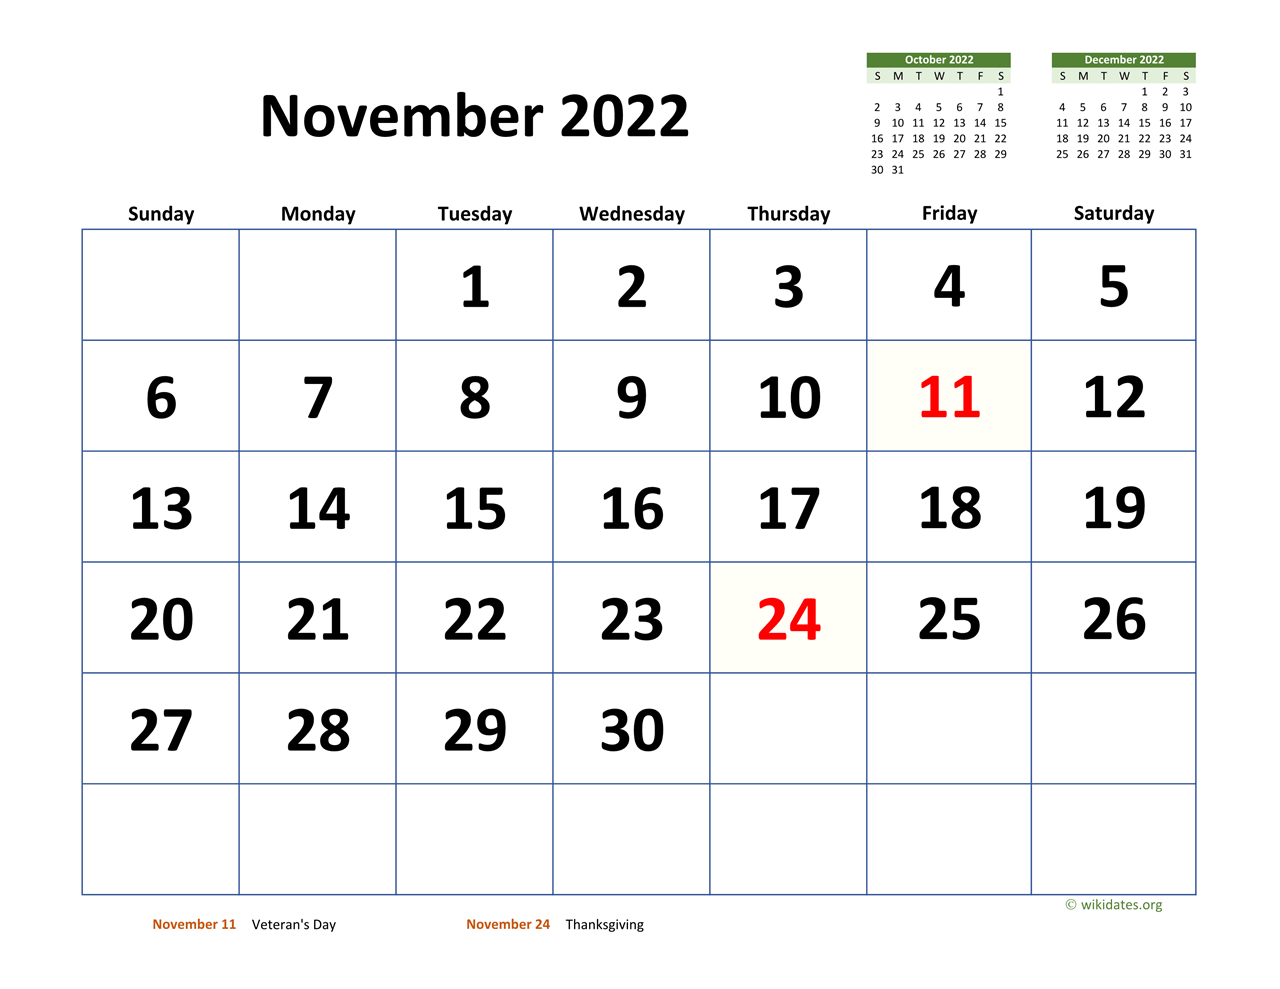 November 6 2022 Calendar November 2022 Calendar With Extra-Large Dates | Wikidates.org